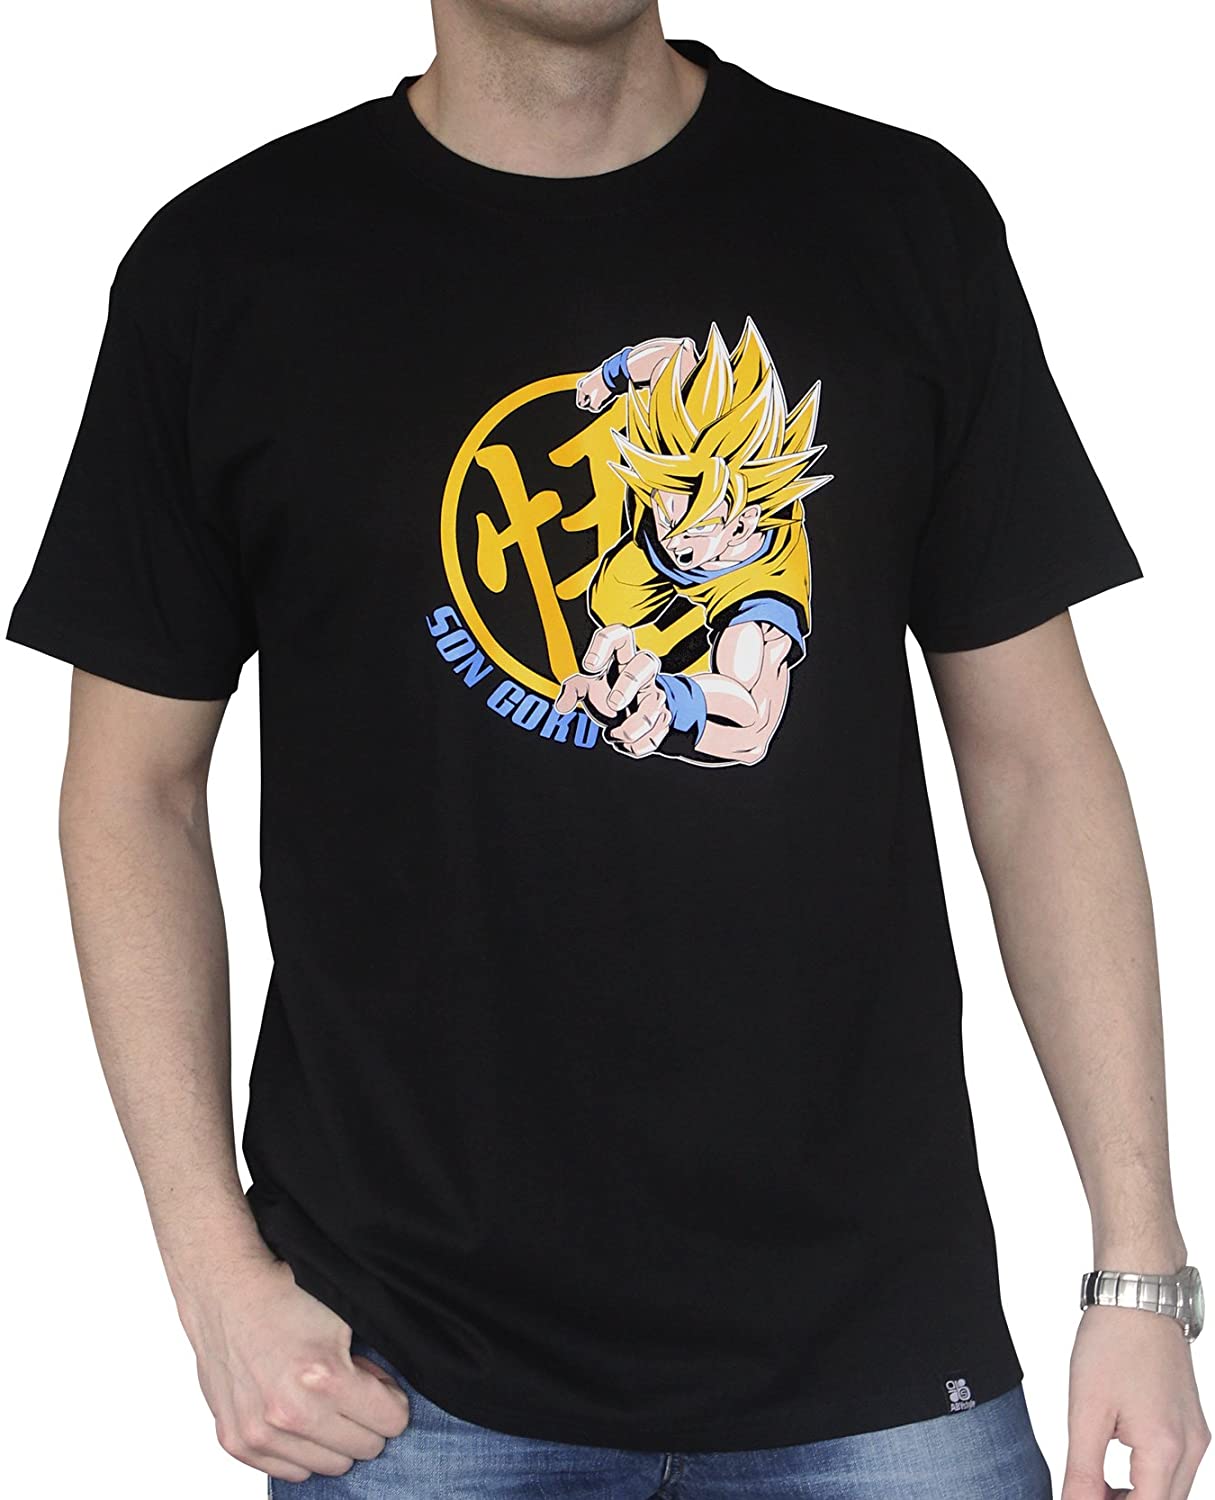 § Dragon Ball - Goku Super Saiyan Black Man T-Shirt L